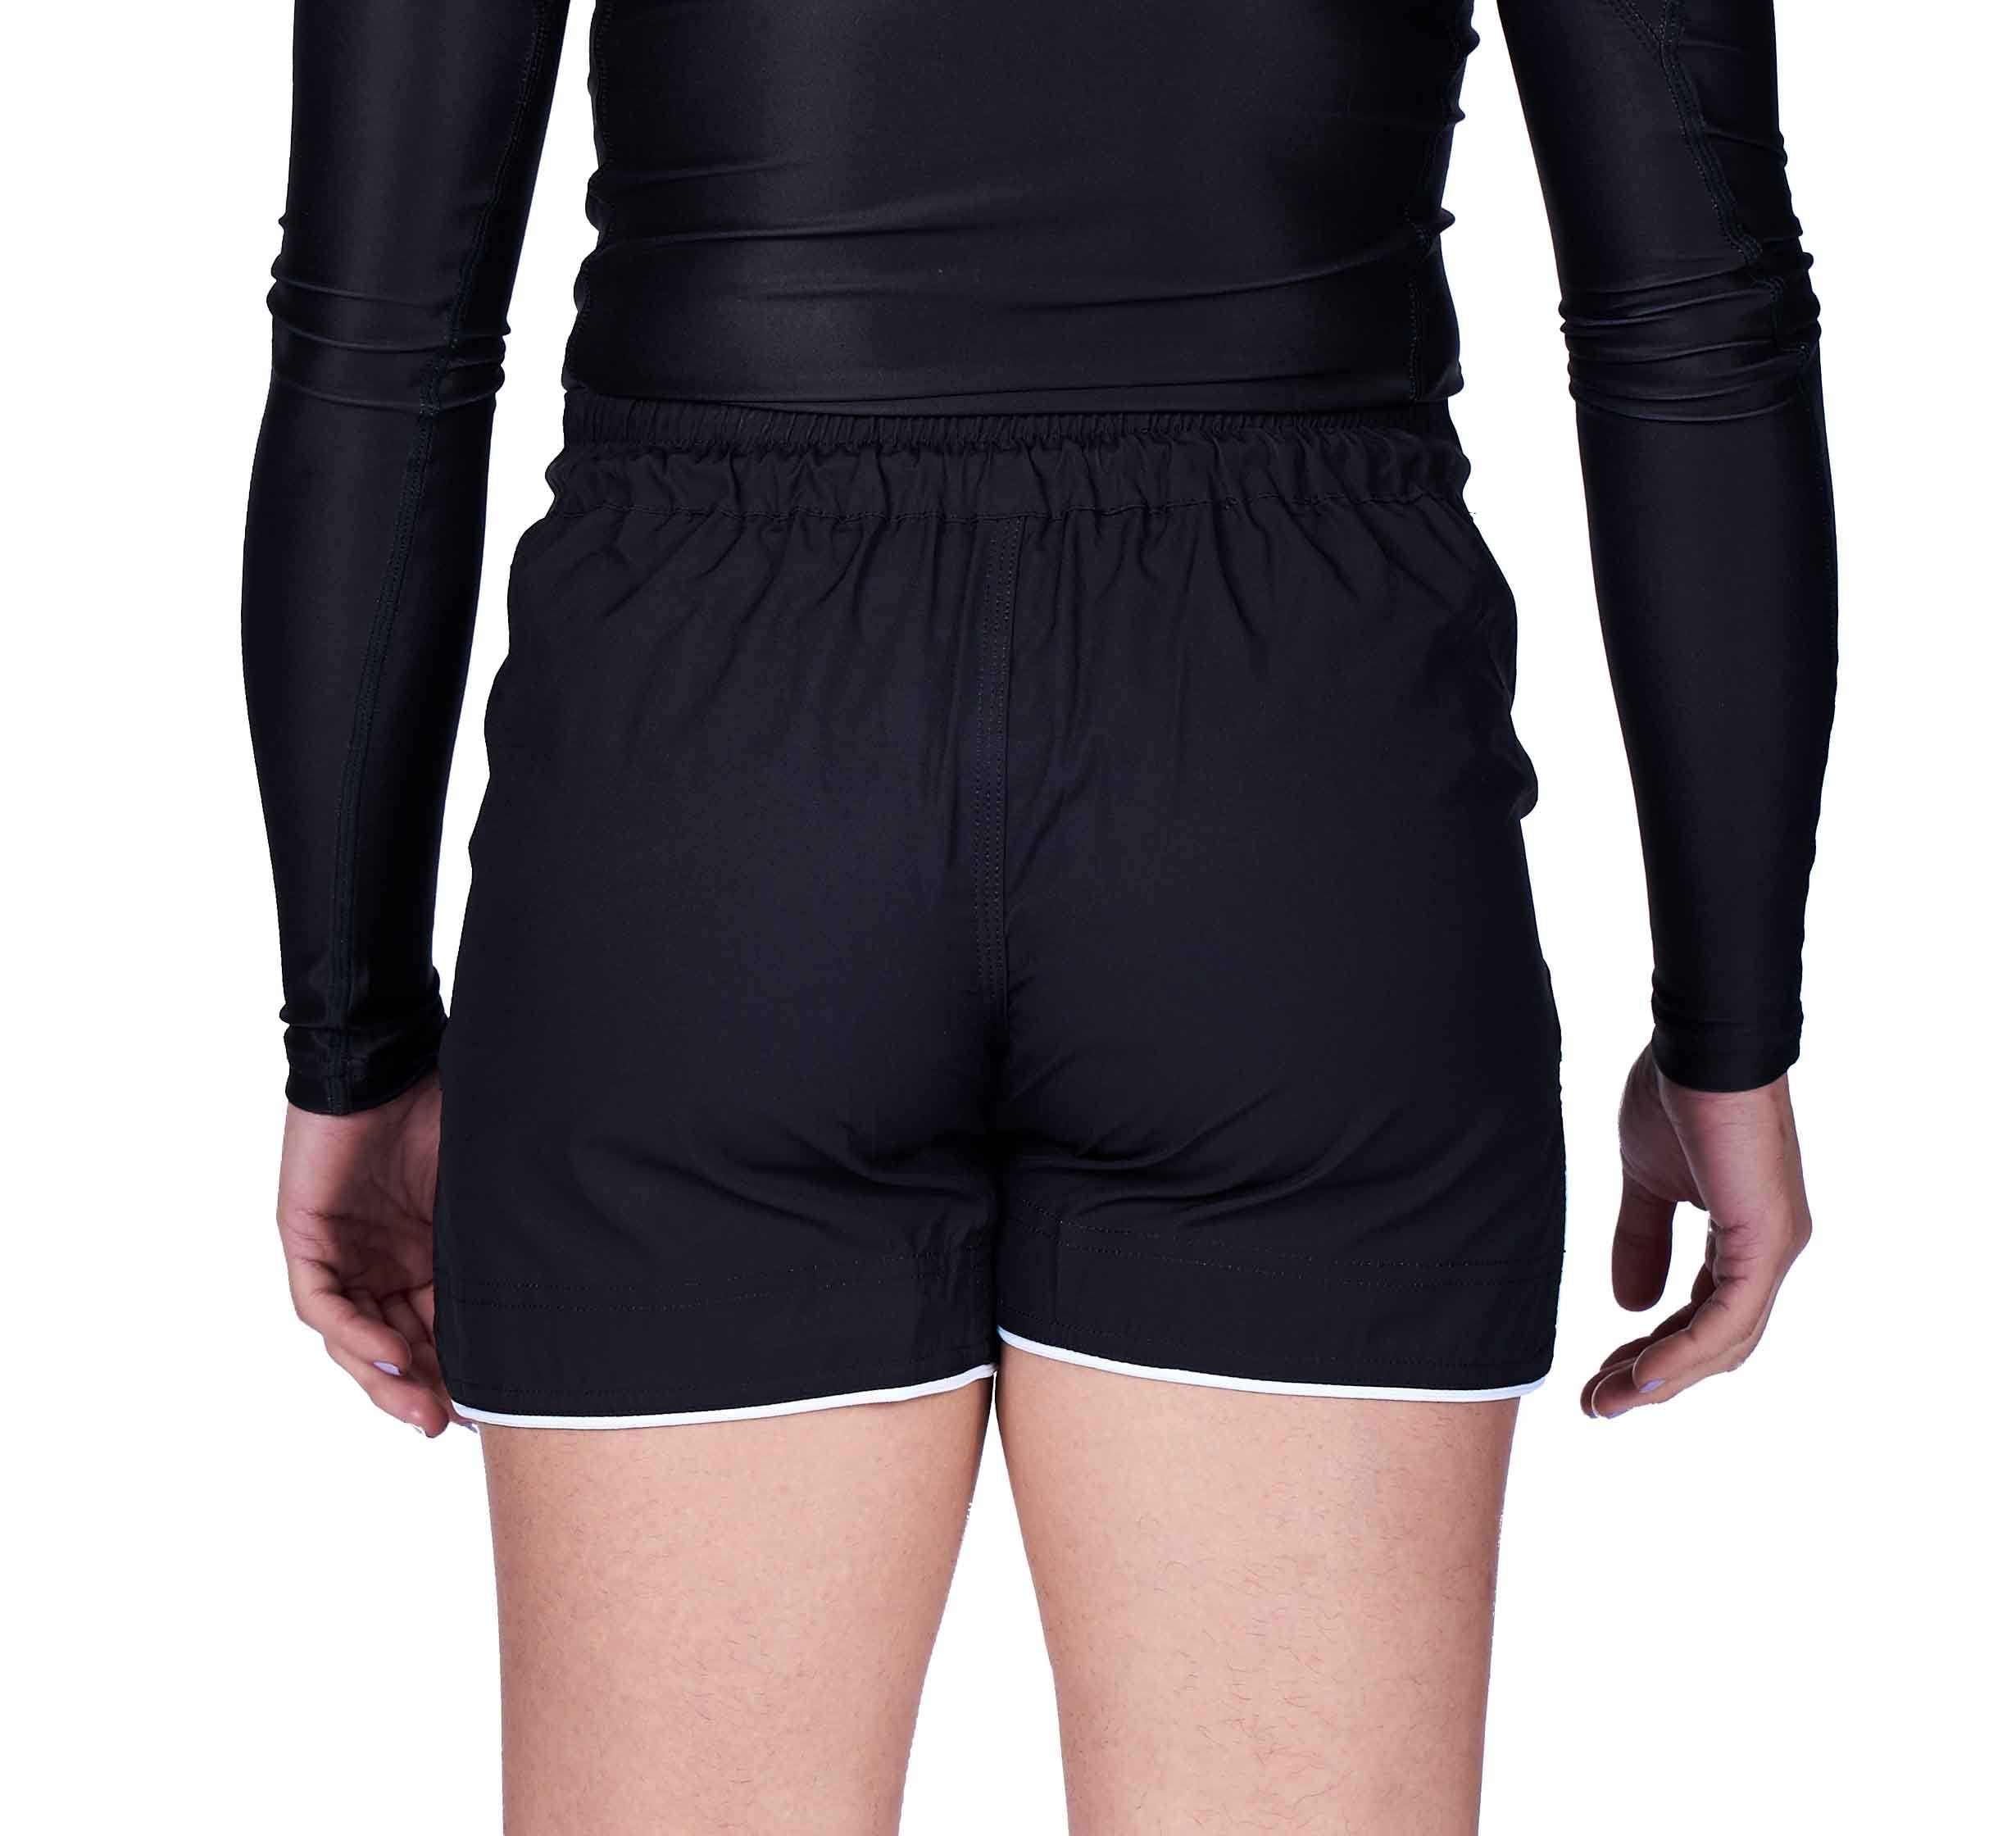 Baseline Women's Grappling Shorts